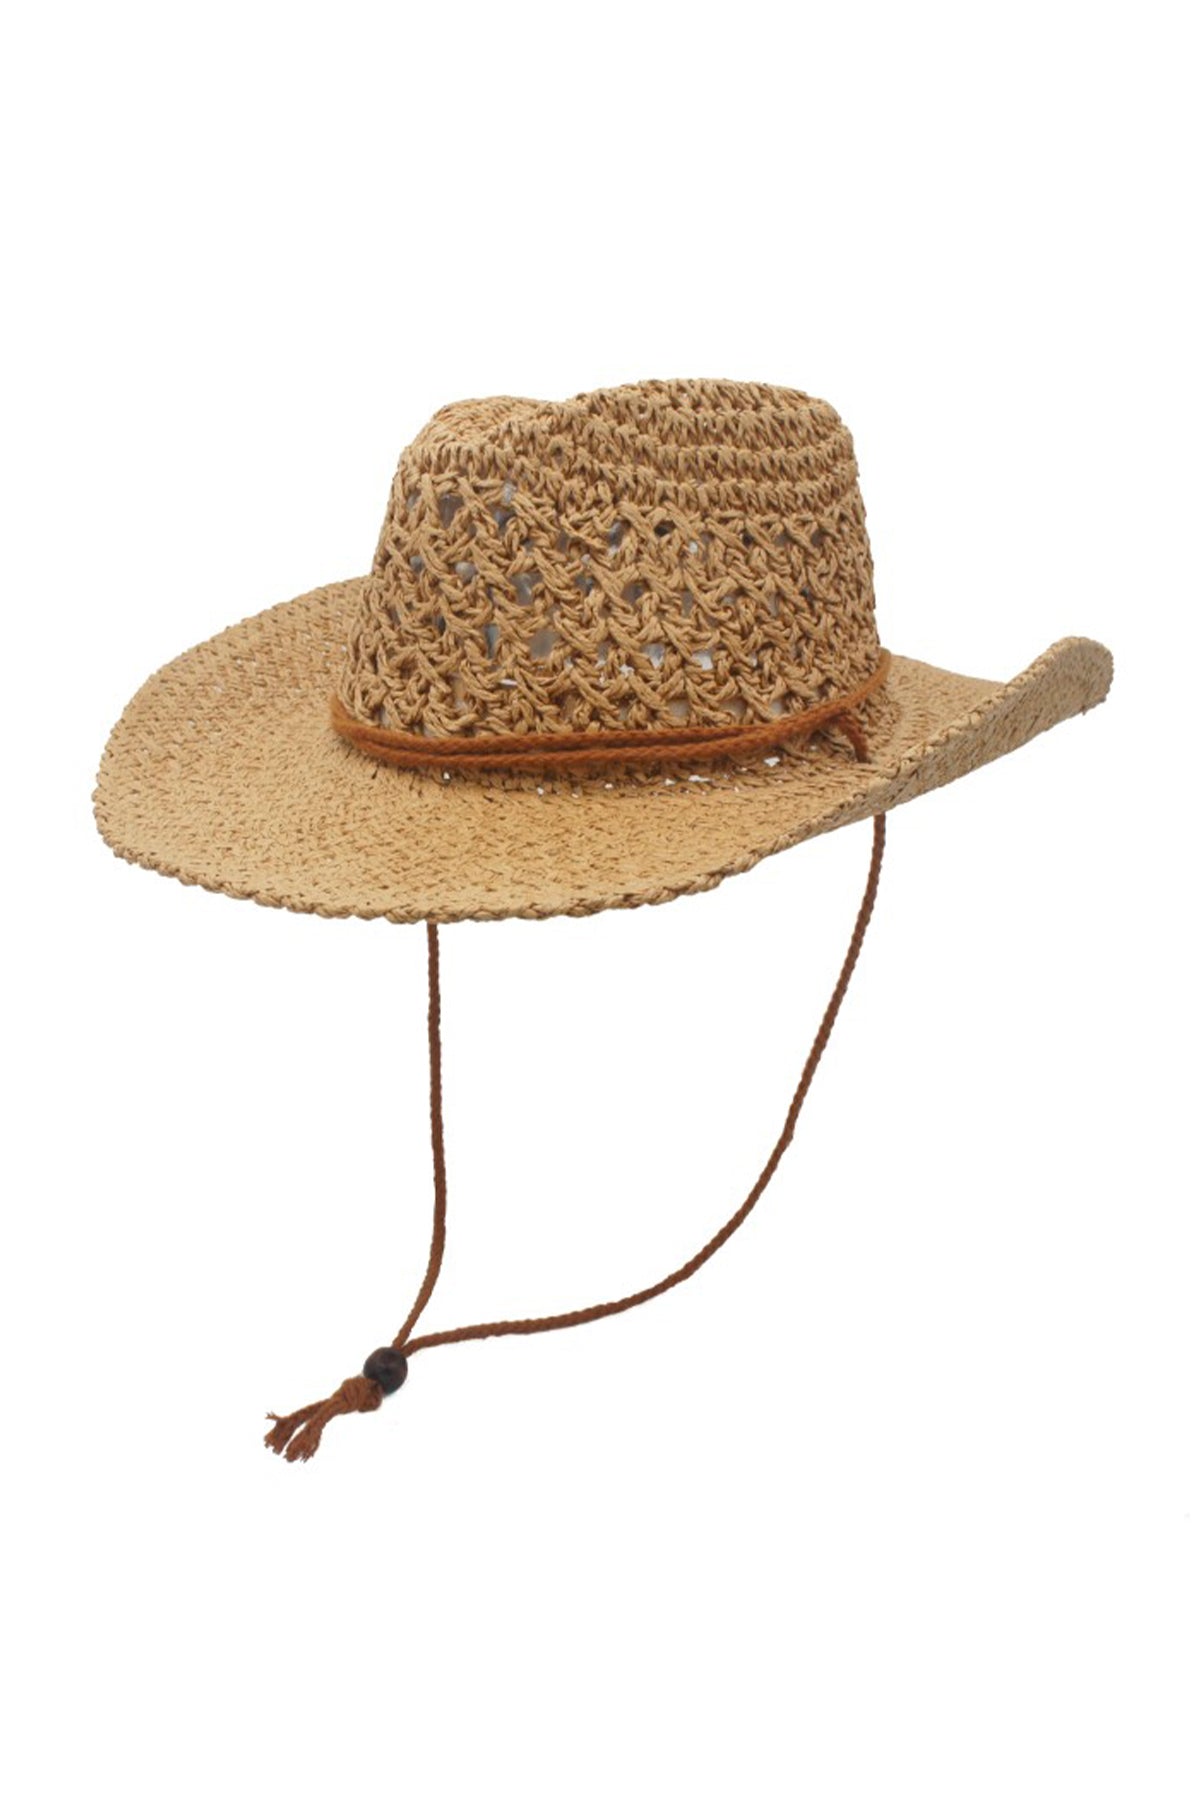 Crochet Weave Cowboy Style Hat